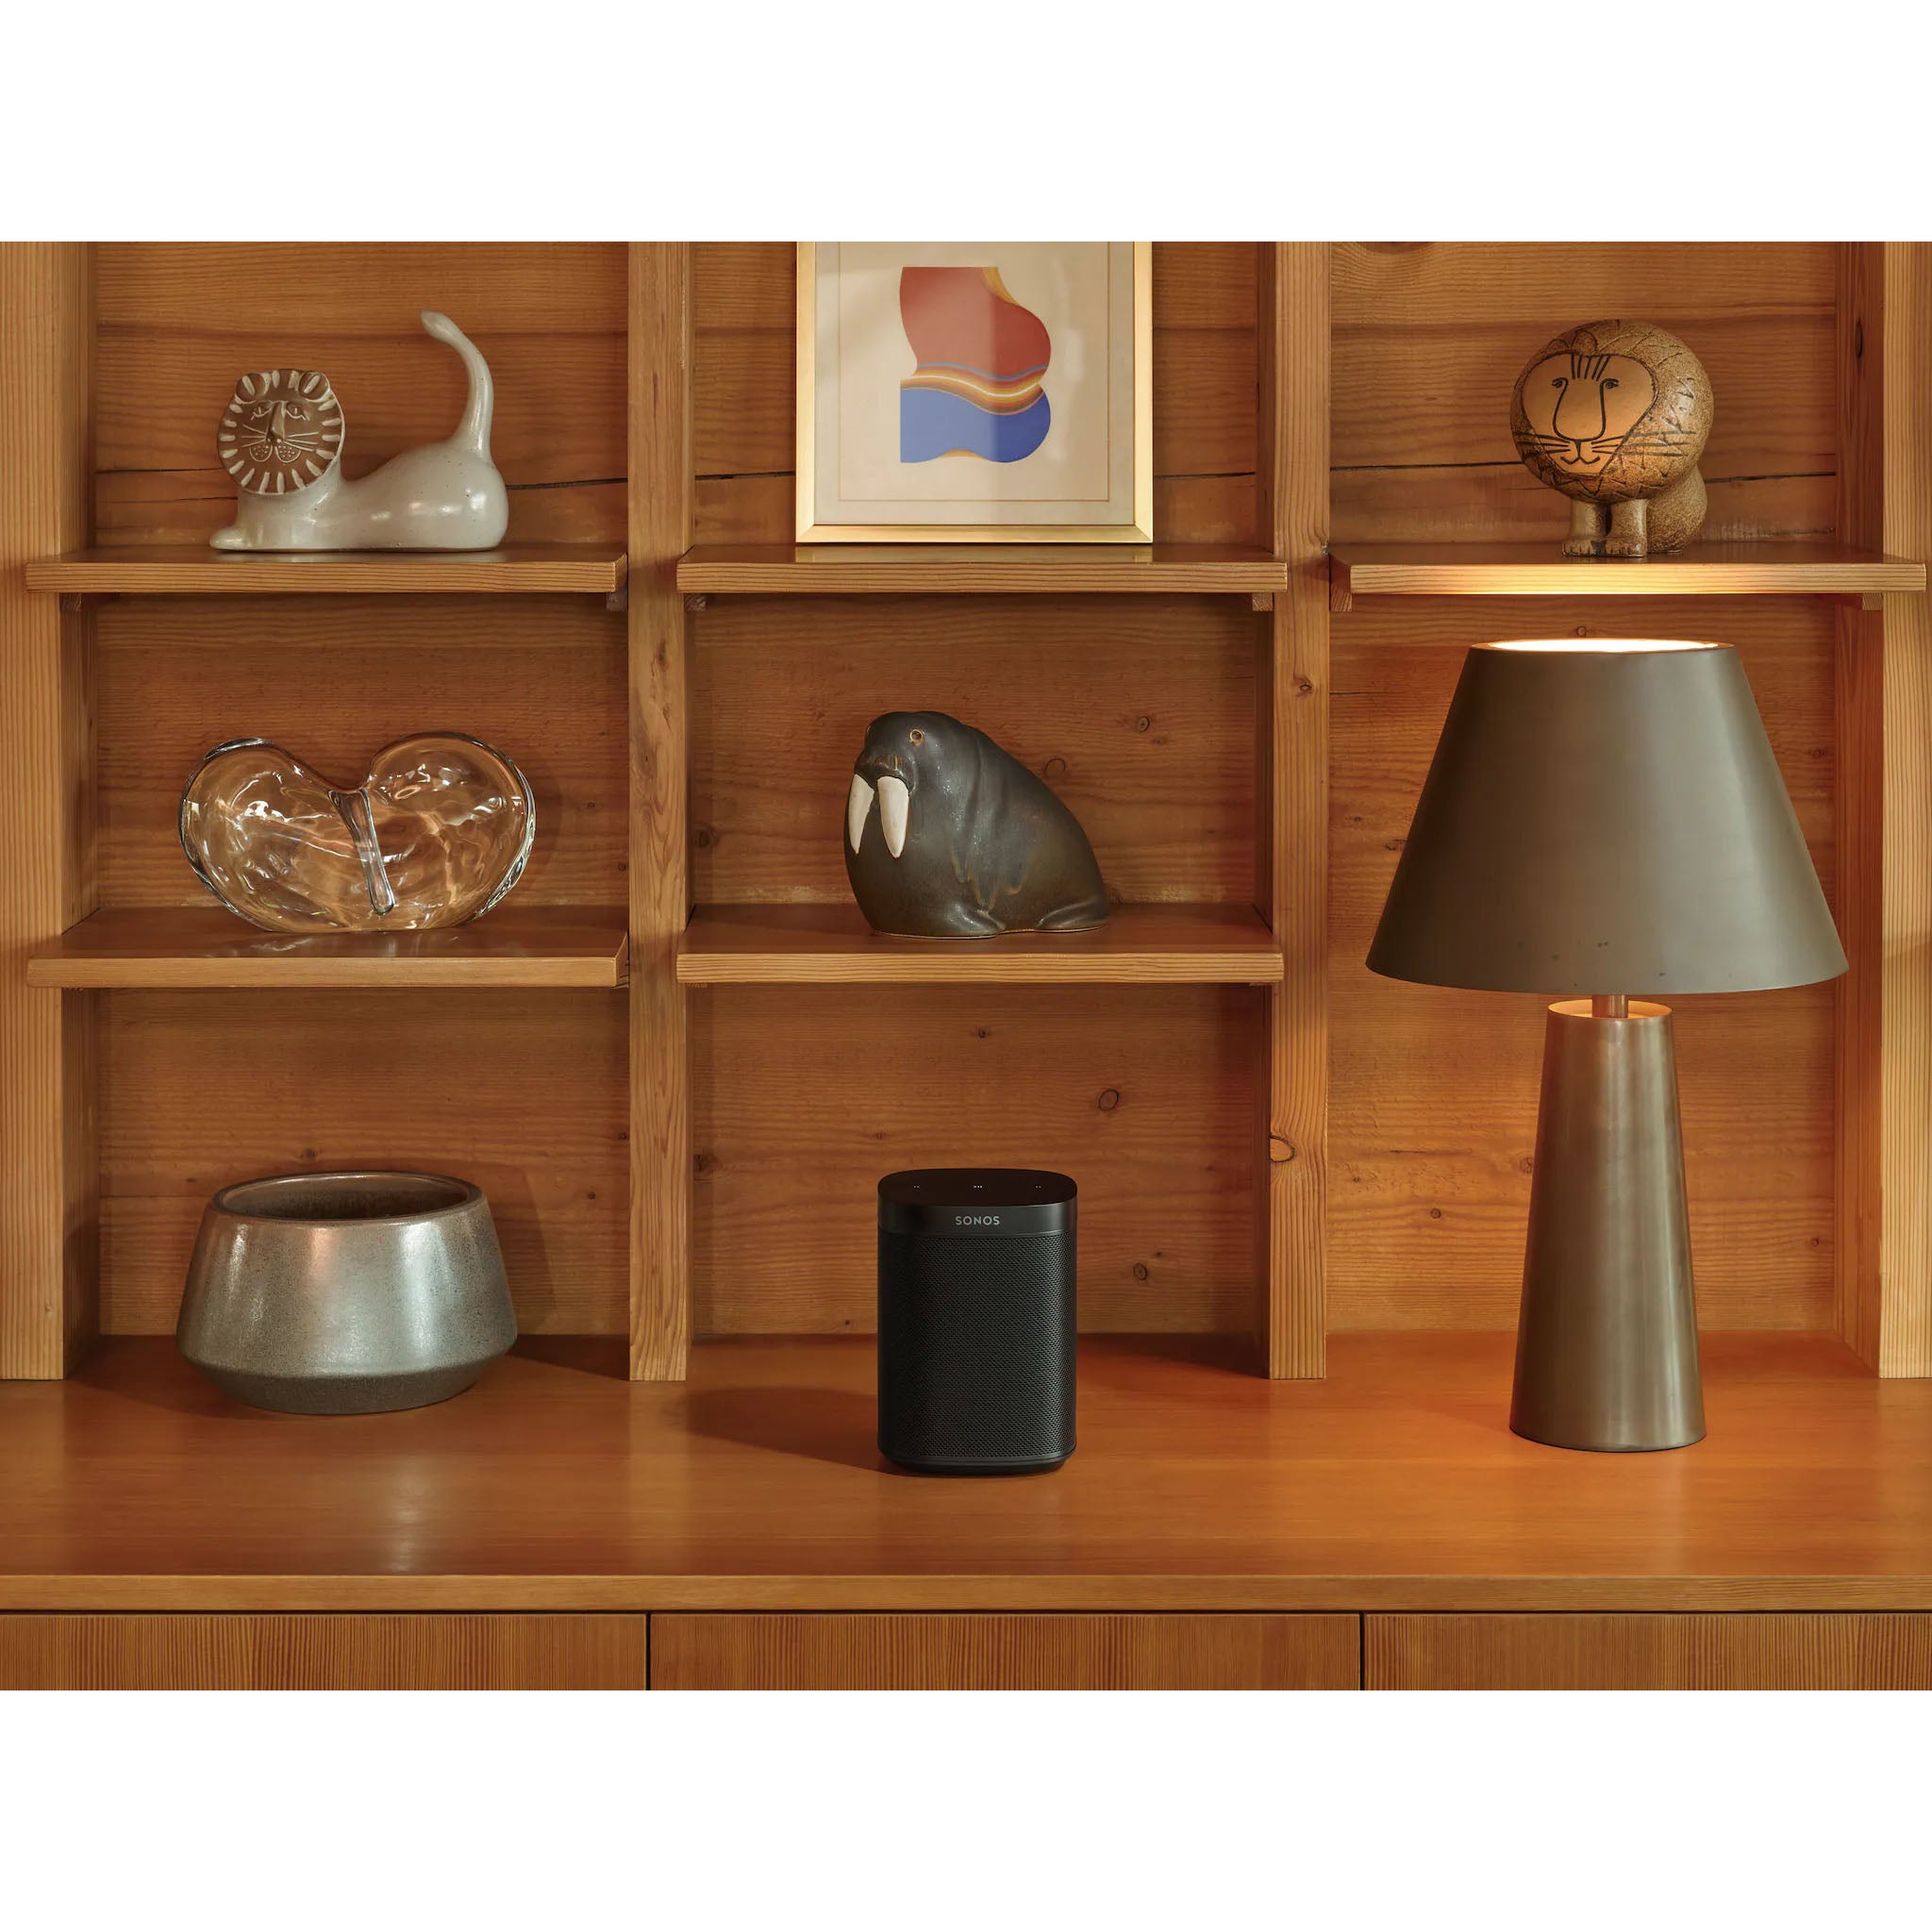 Sonos One SL - The Ultimate Wireless Bookshelf Speaker